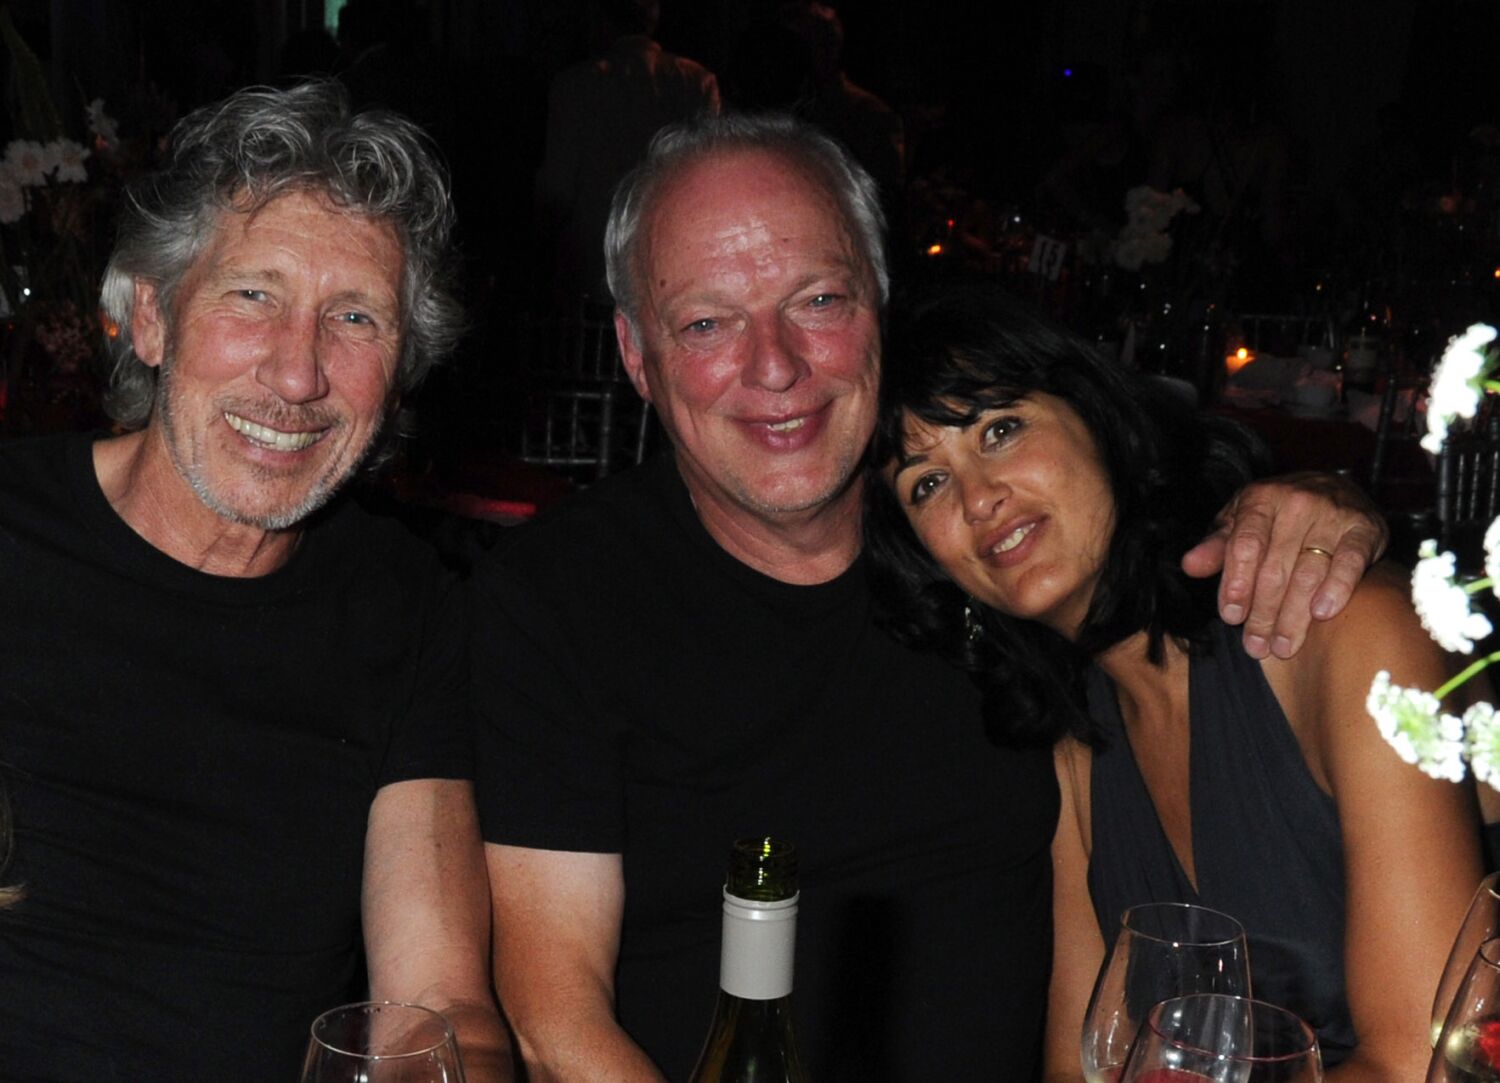 Pink Floyd lyricist slams Roger Waters as antisemitic 'Putin apologist.' He disagrees